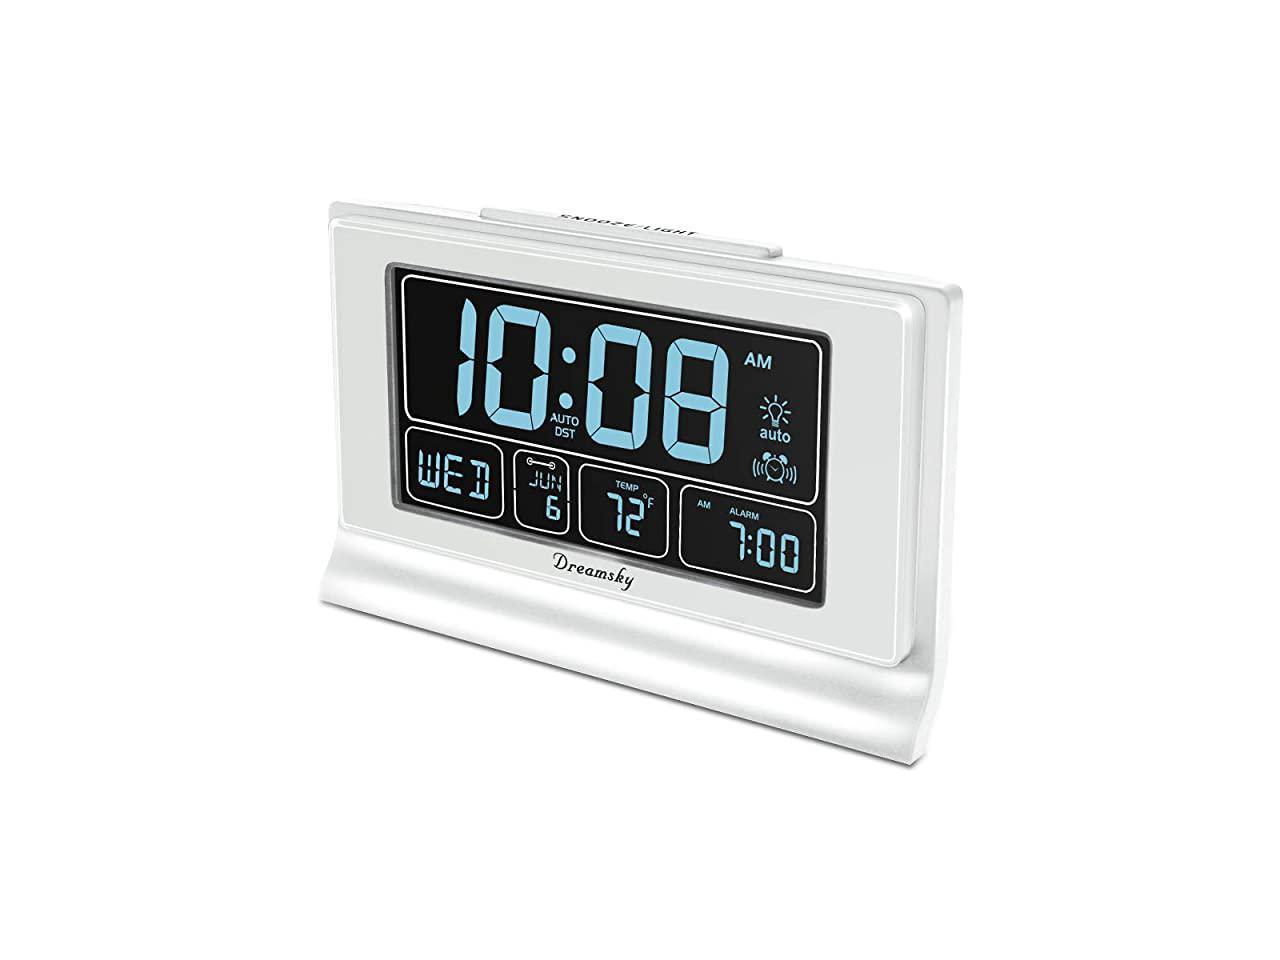 6.6" Large Screen DreamSky Auto Set Digital Alarm Clock with USB Charging Port 